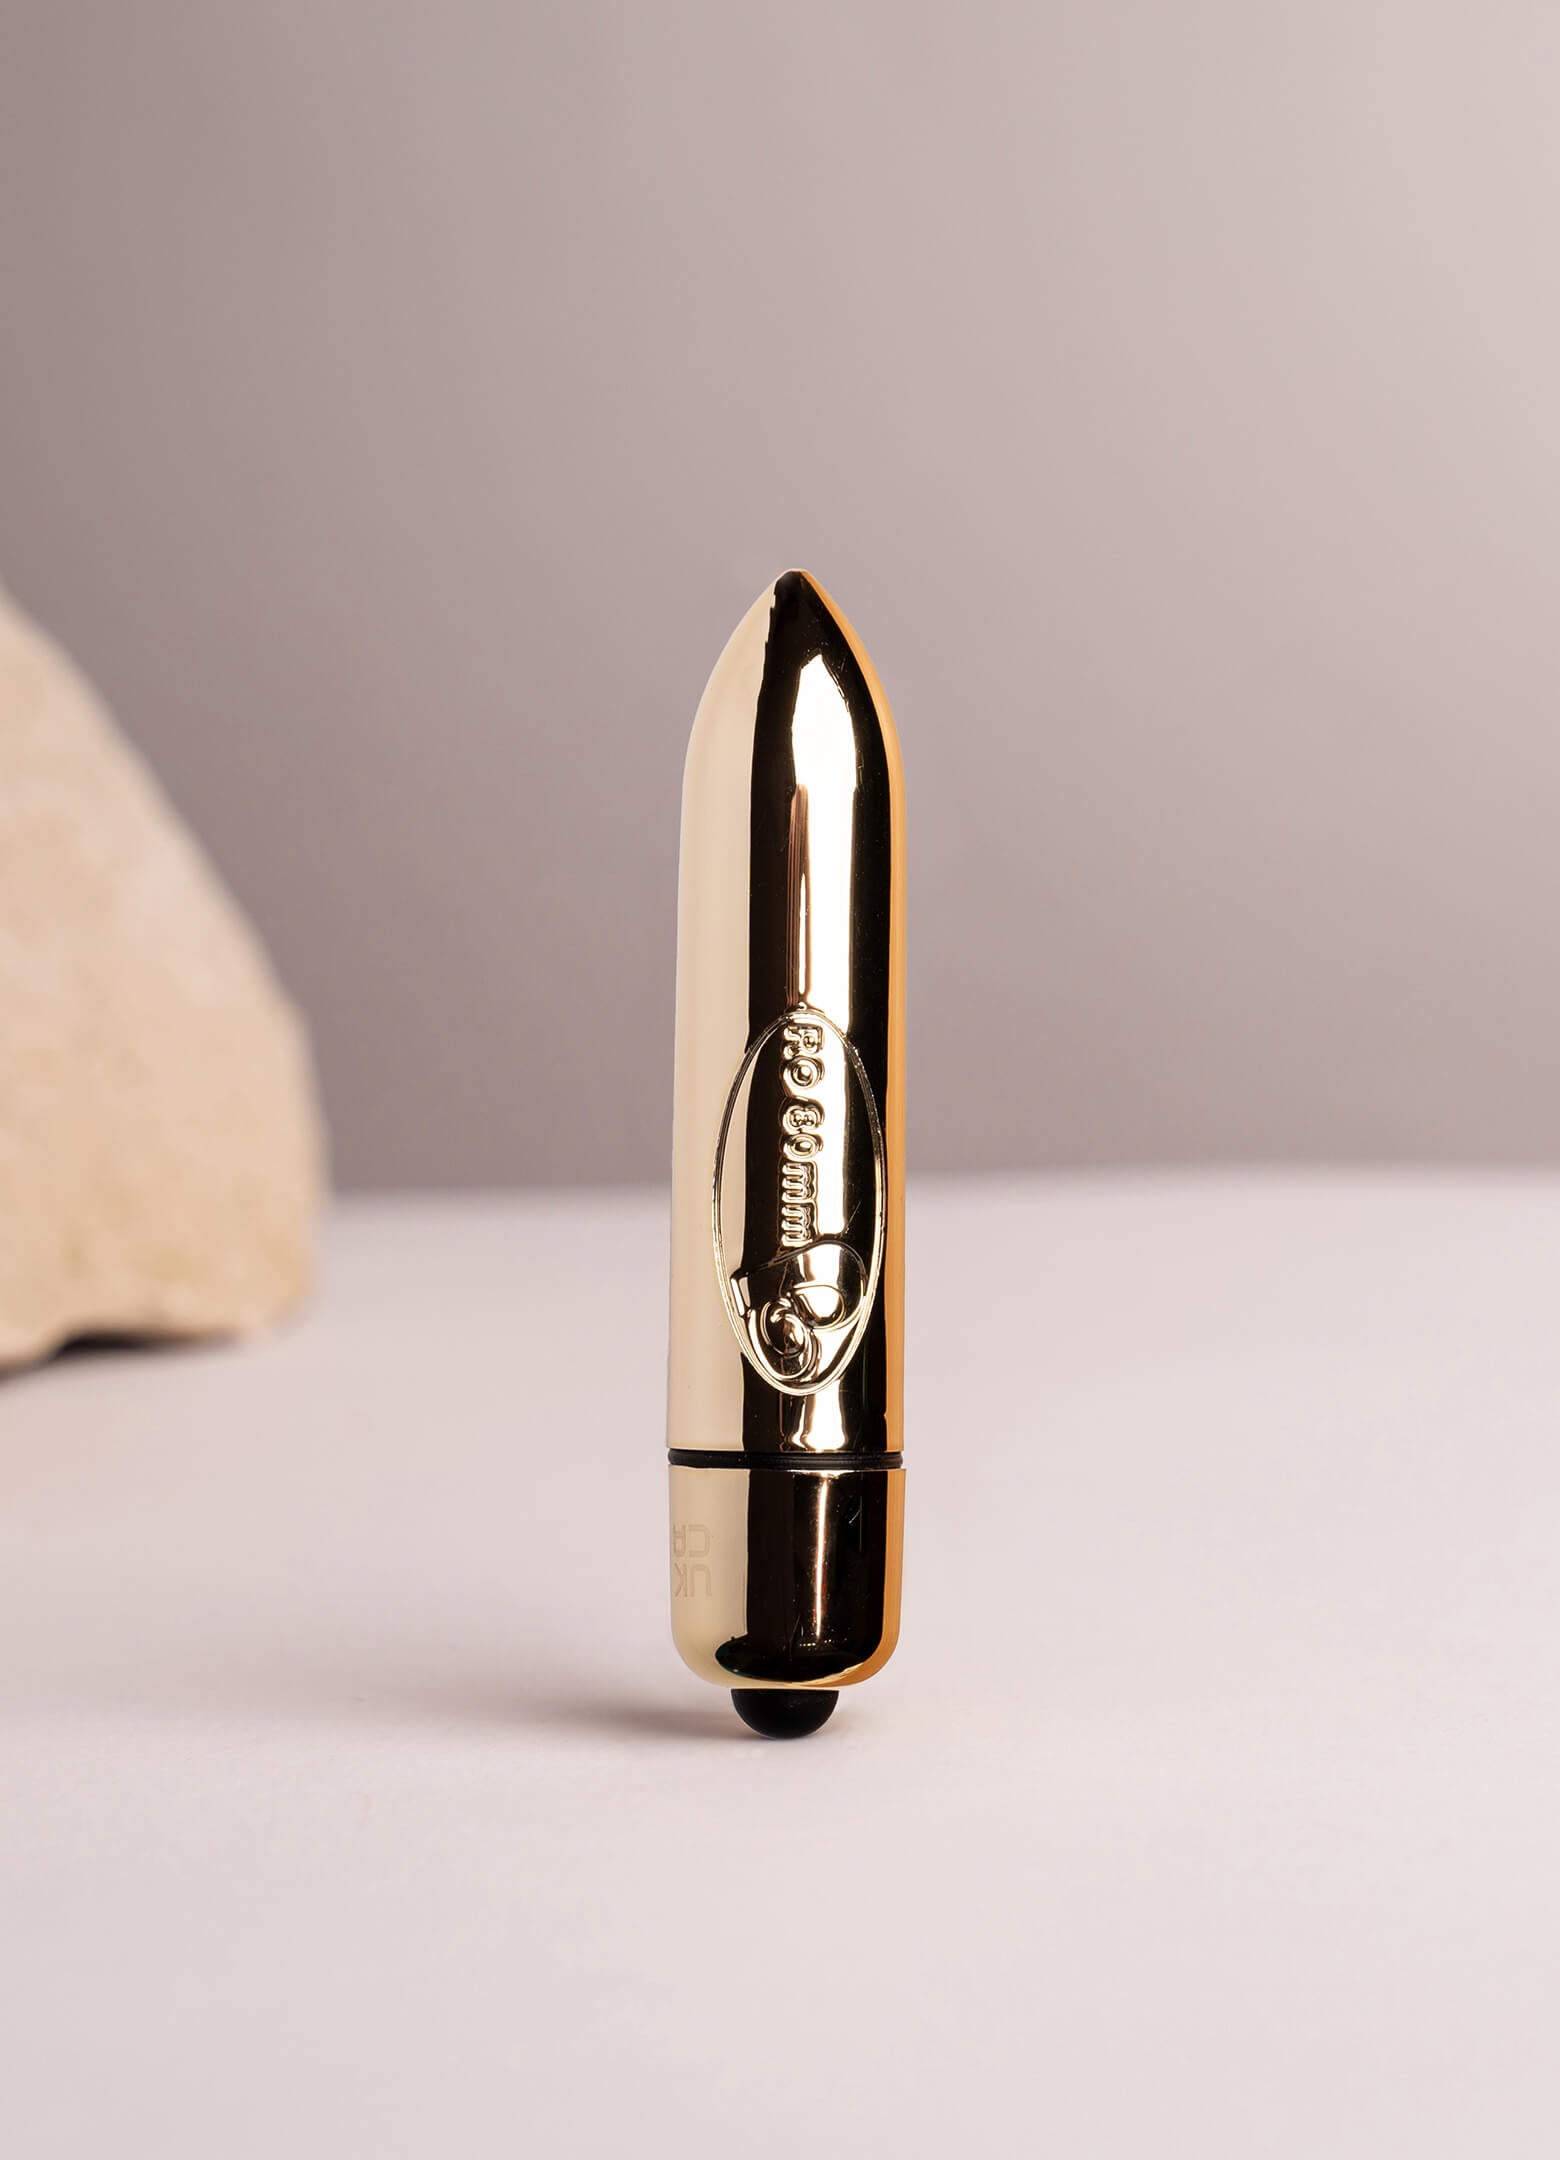 Small bullet vibrator in gold chrome.